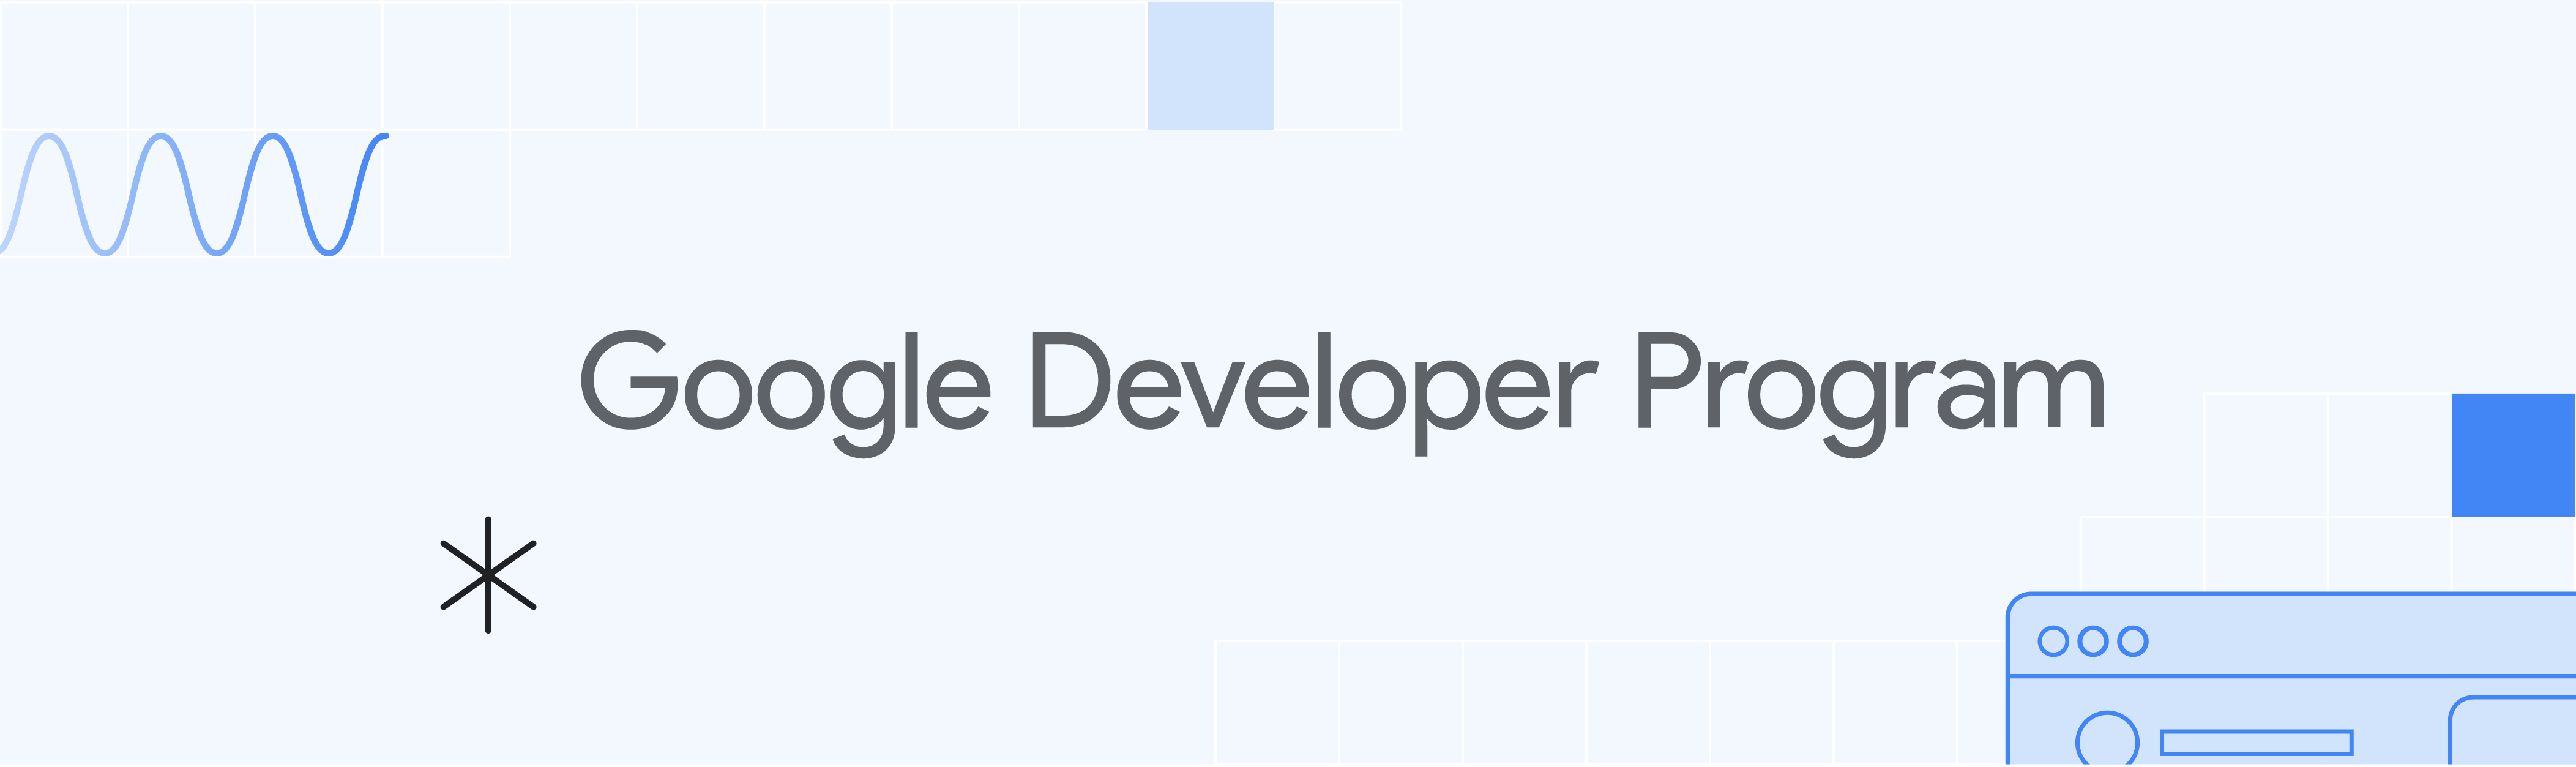 Light blue banner with 'Google Developer Program' and illustrations.